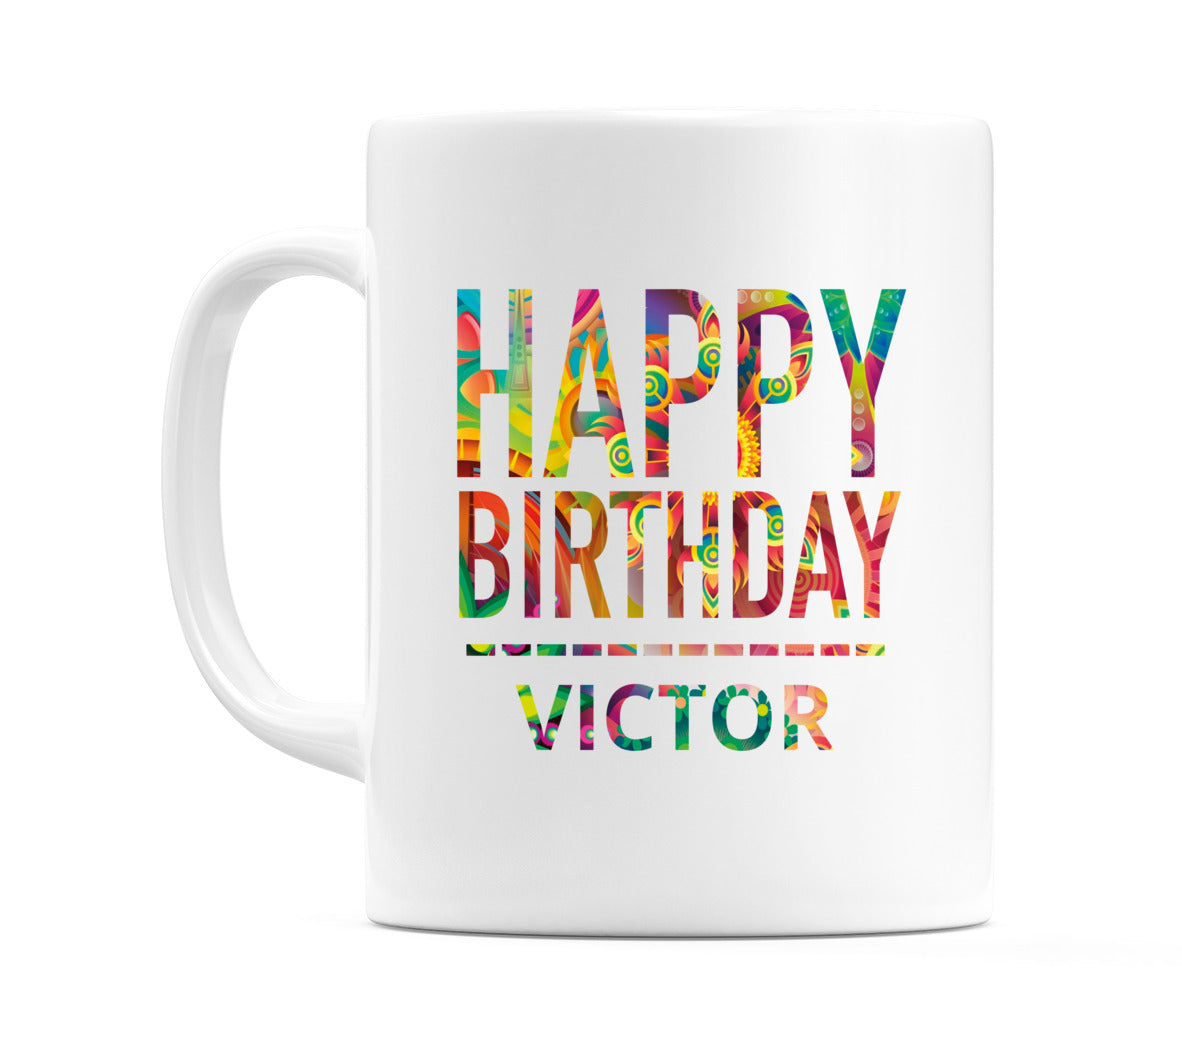 Happy Birthday Victor (Tie Dye Effect) Mug Cup by WeDoMugs